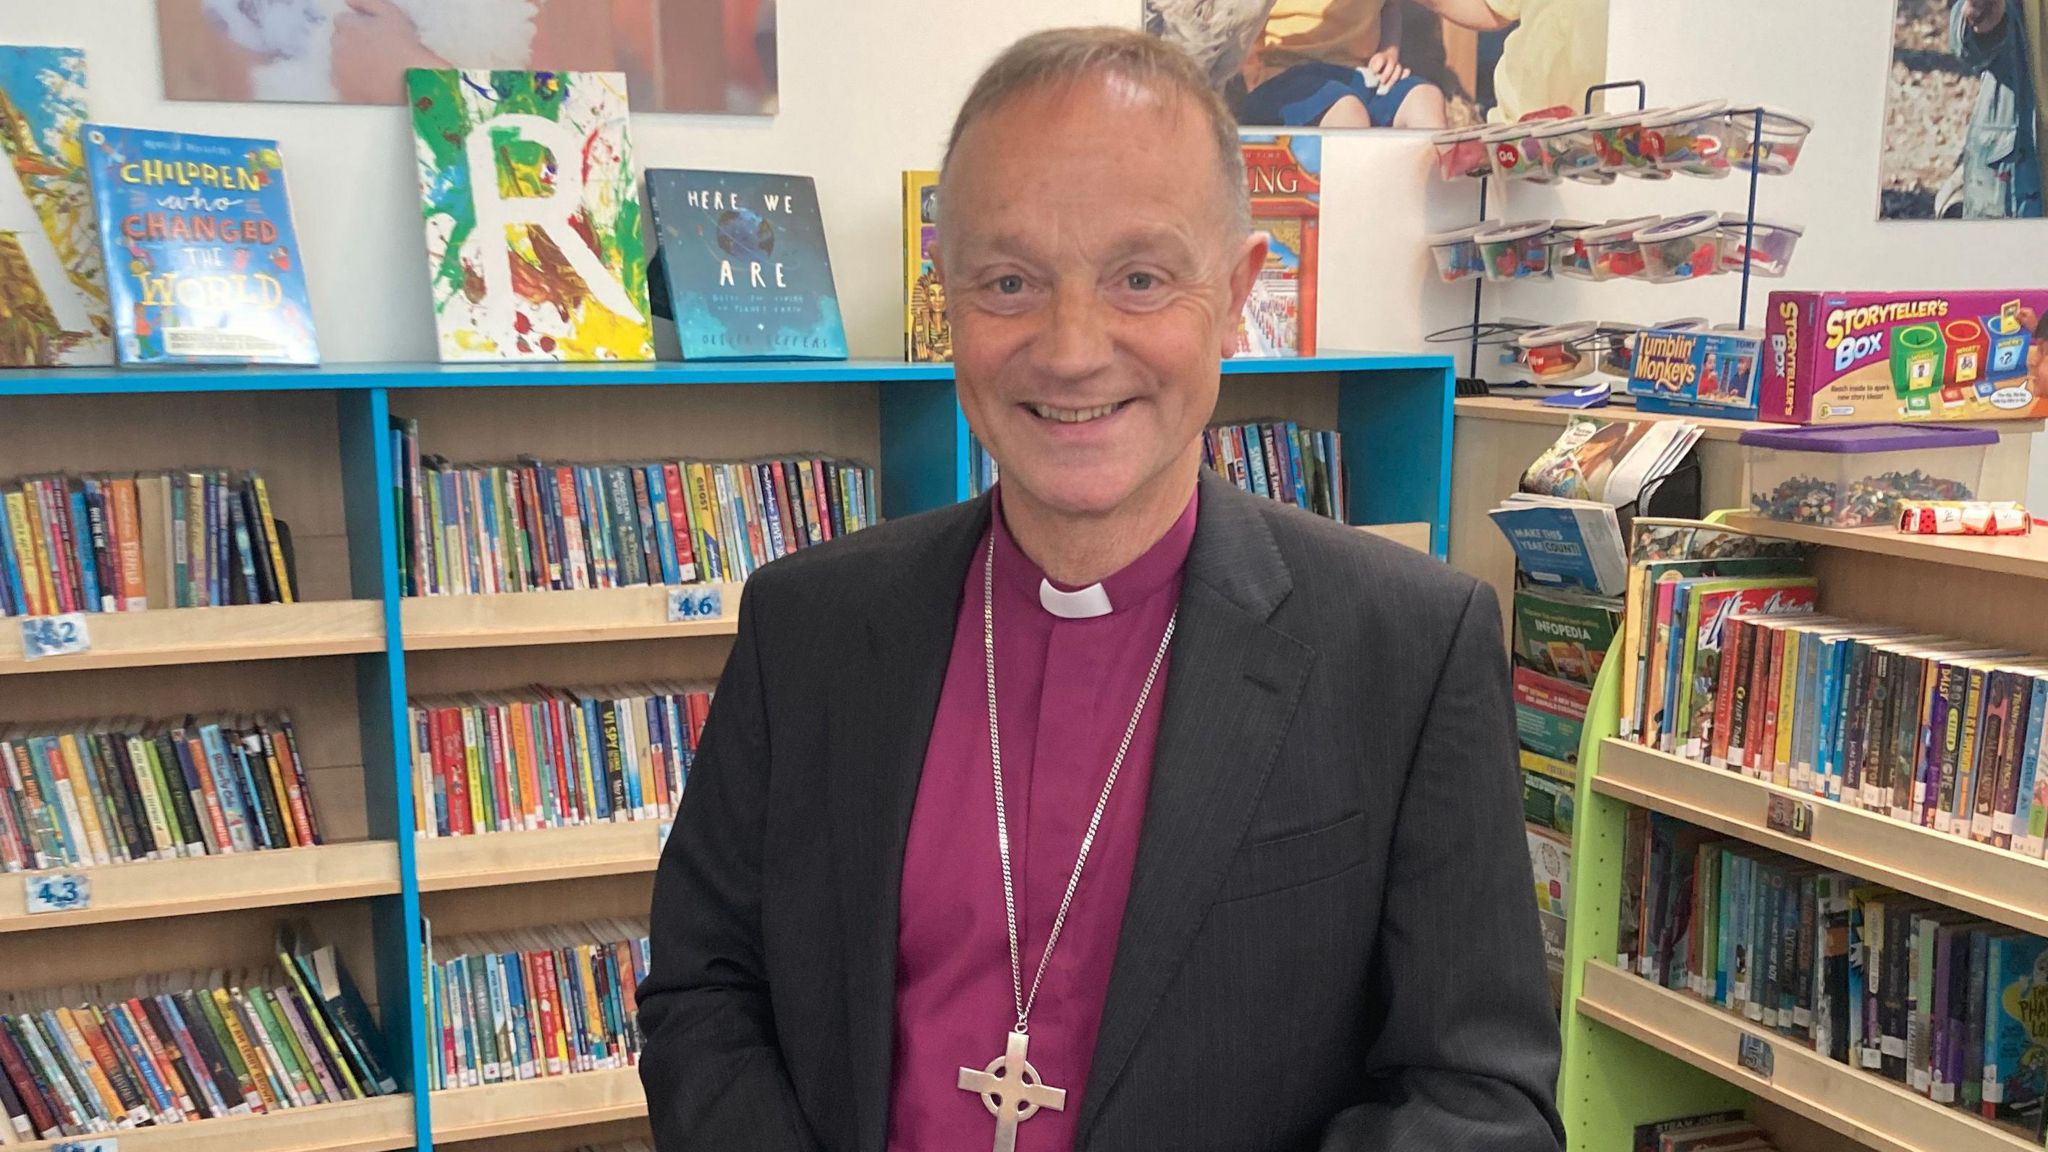 Bishop Harrison at St Martin’s Cof E Primary School in Cranbrook